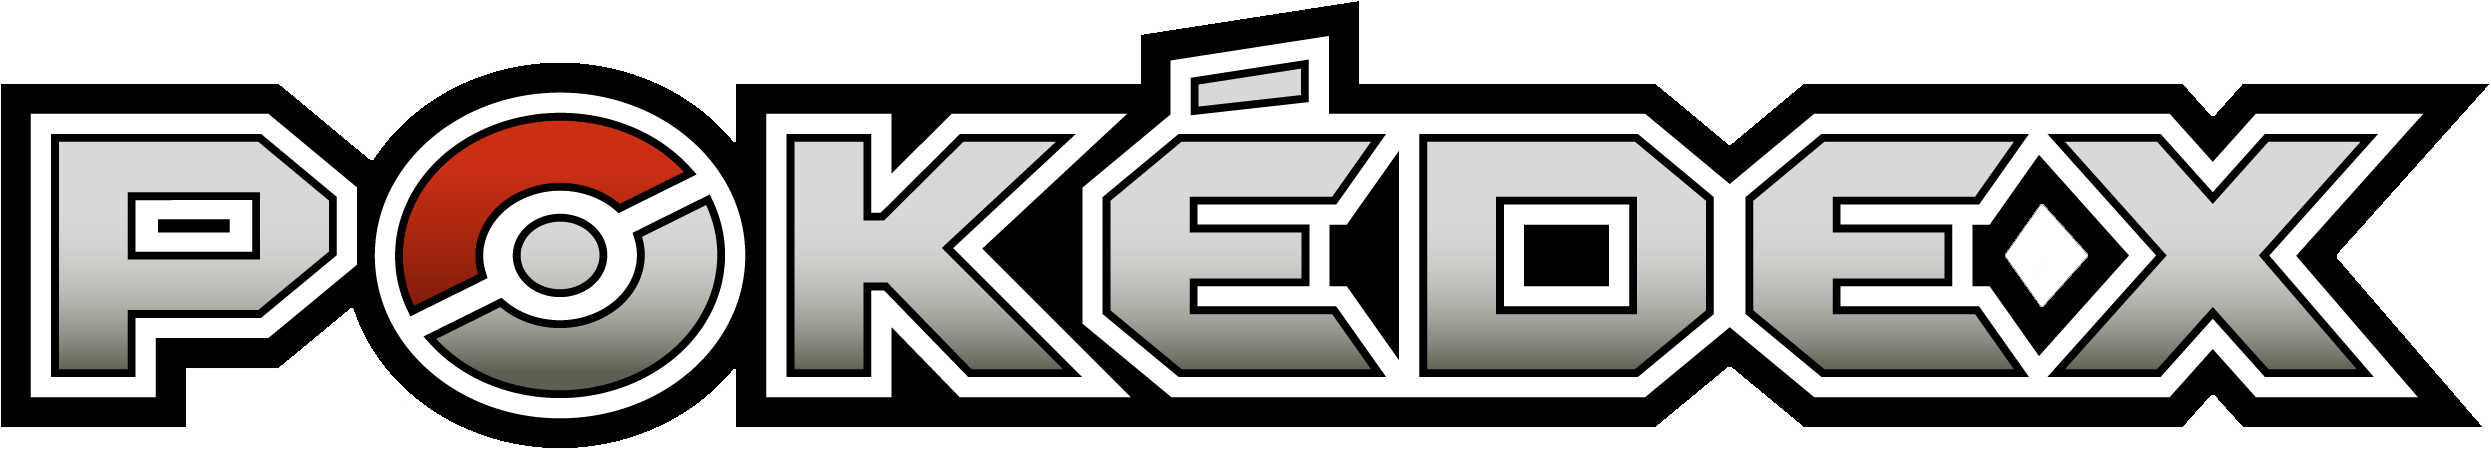 Logo de Pokedex